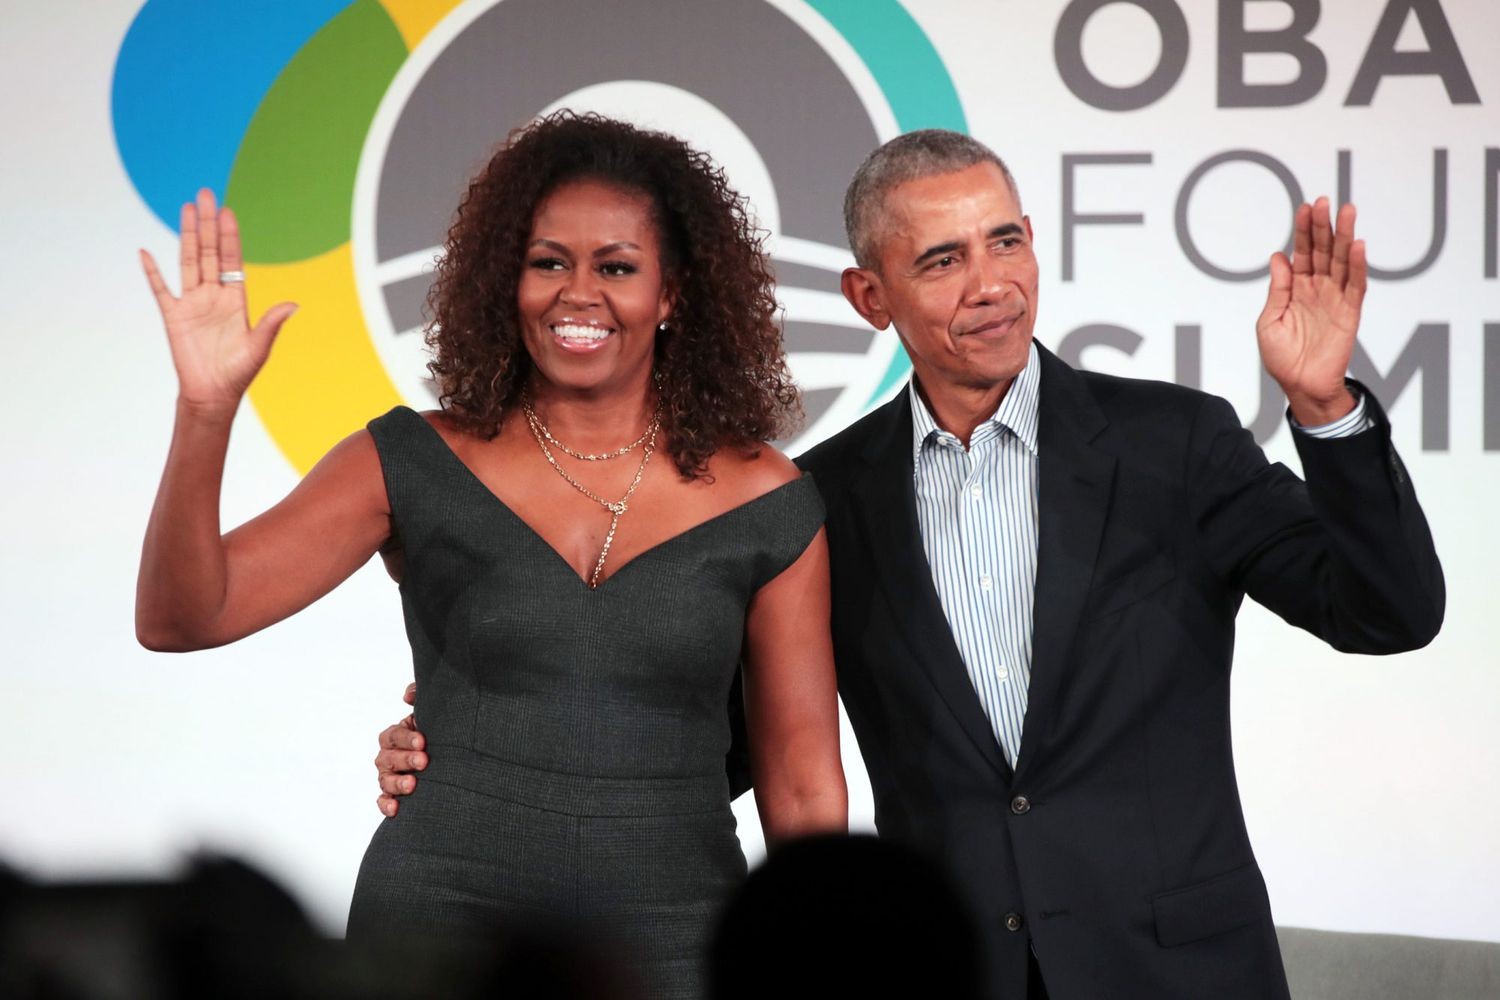 Barack Obama and Michelle Obama